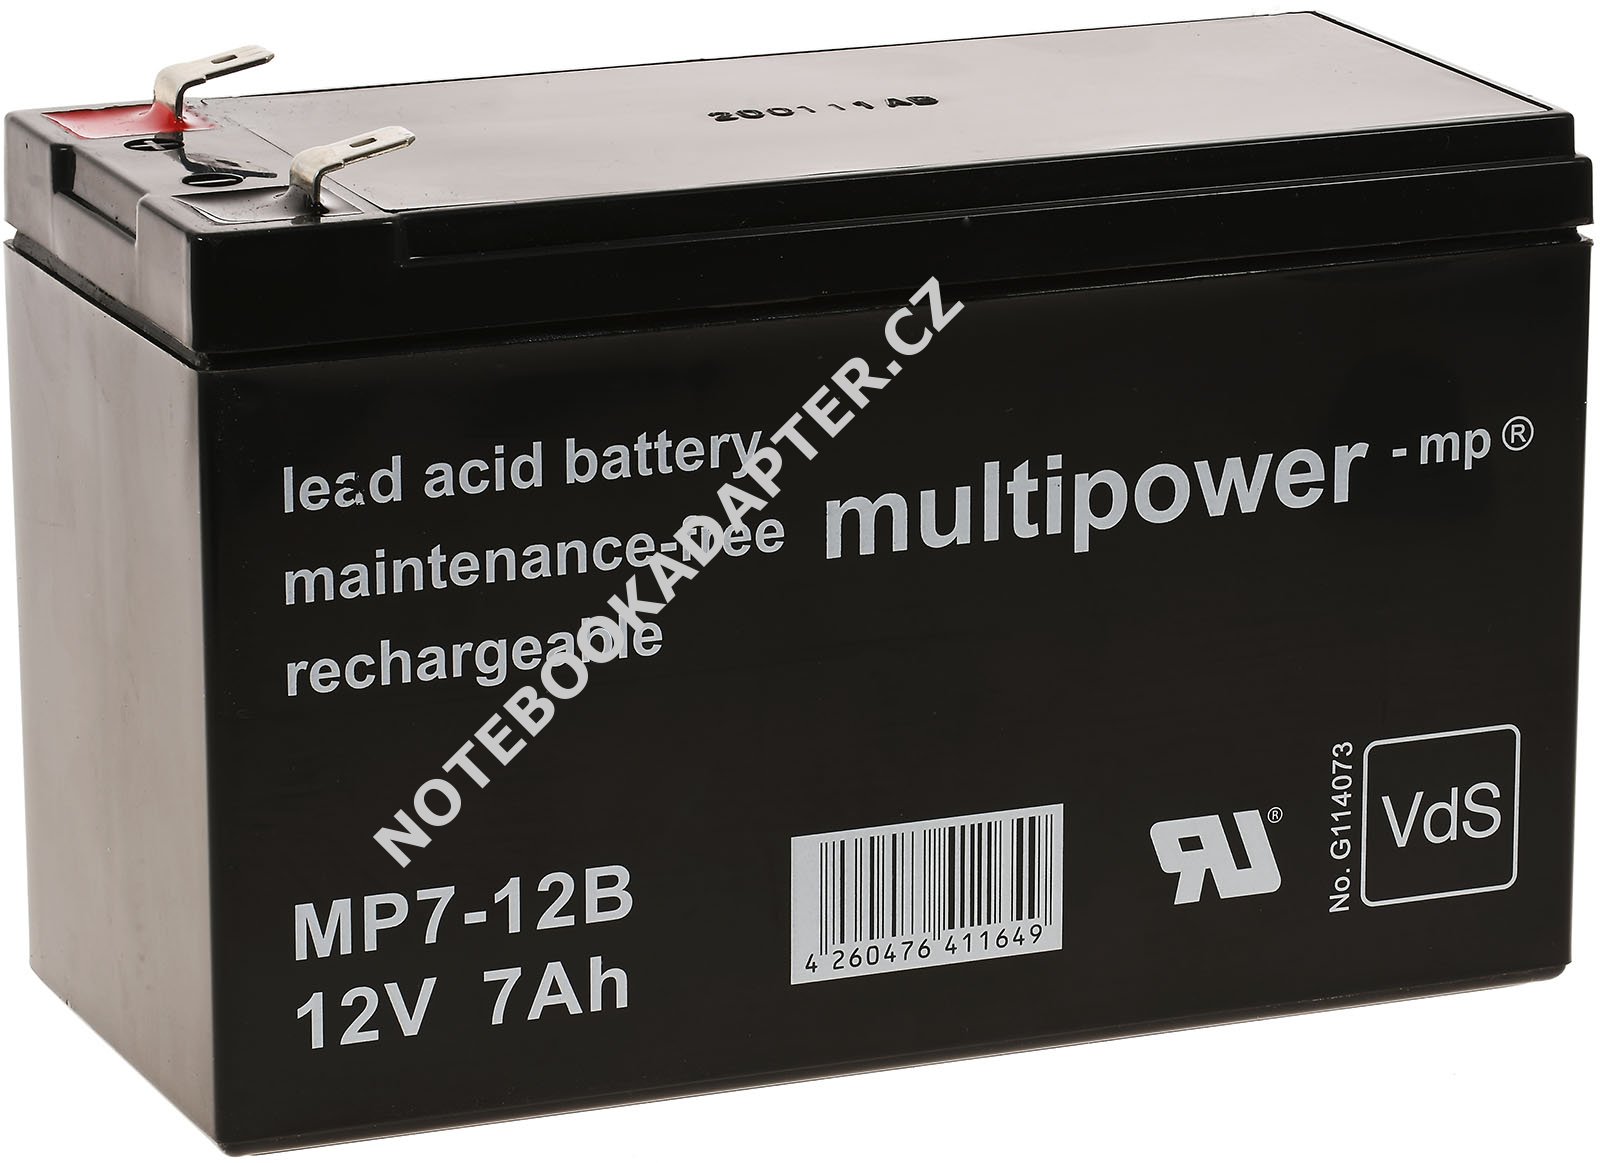 Olověná baterie UPS APC Power Saving Back-UPS ES 8 Outlet - Multipower